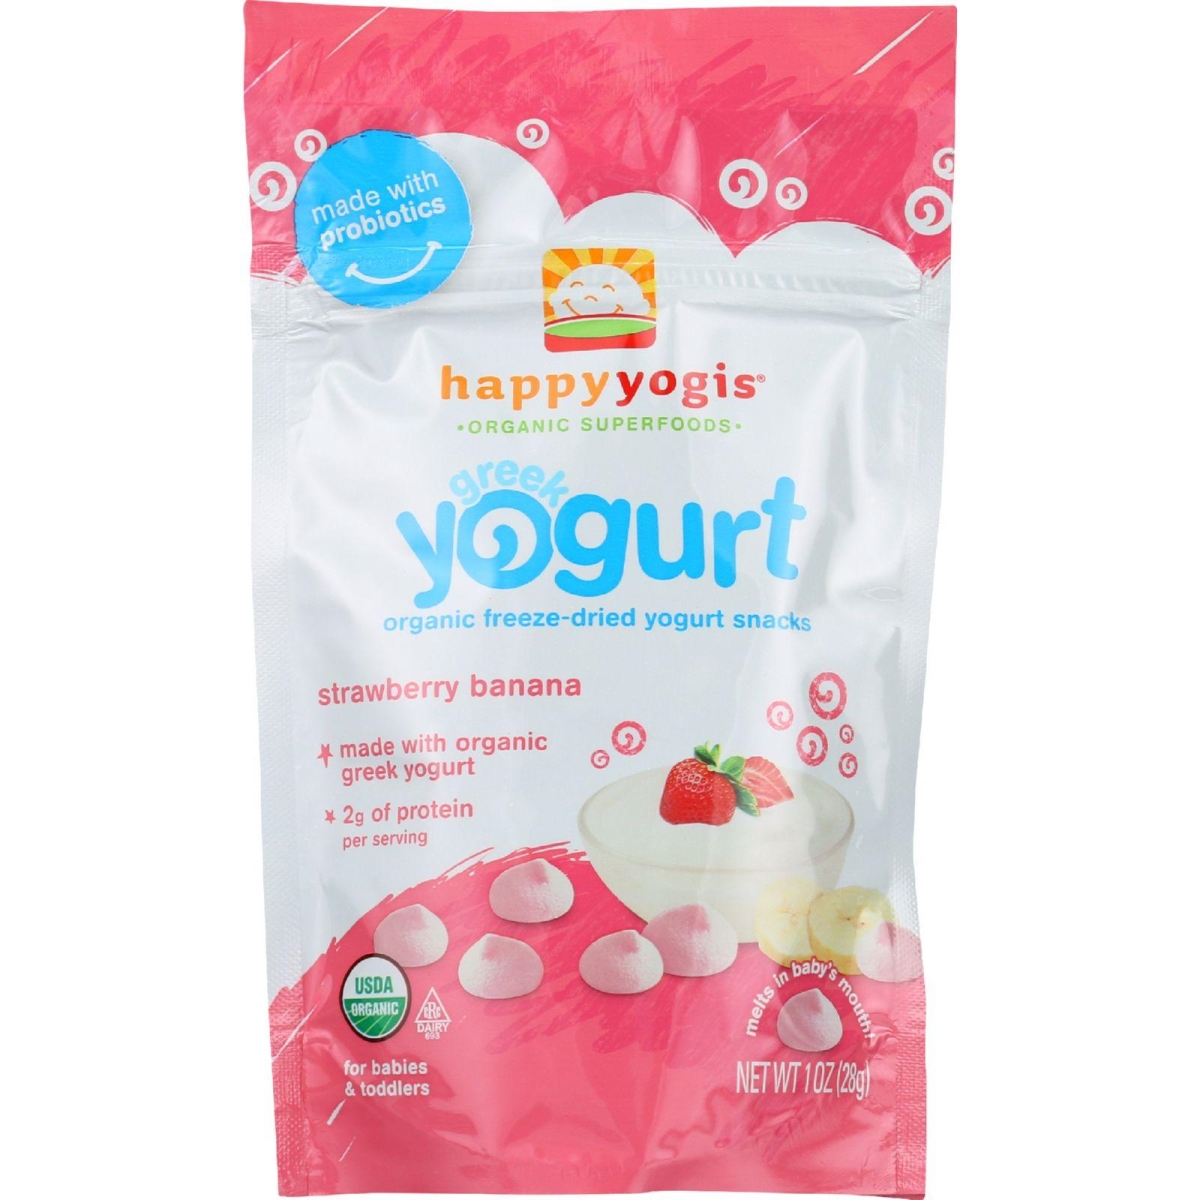 Hg1624808 1 Oz Strawberry Banana Yogurt Snacks - Organic Freeze-dried Greek For Babies & Toddlers, Case Of 8